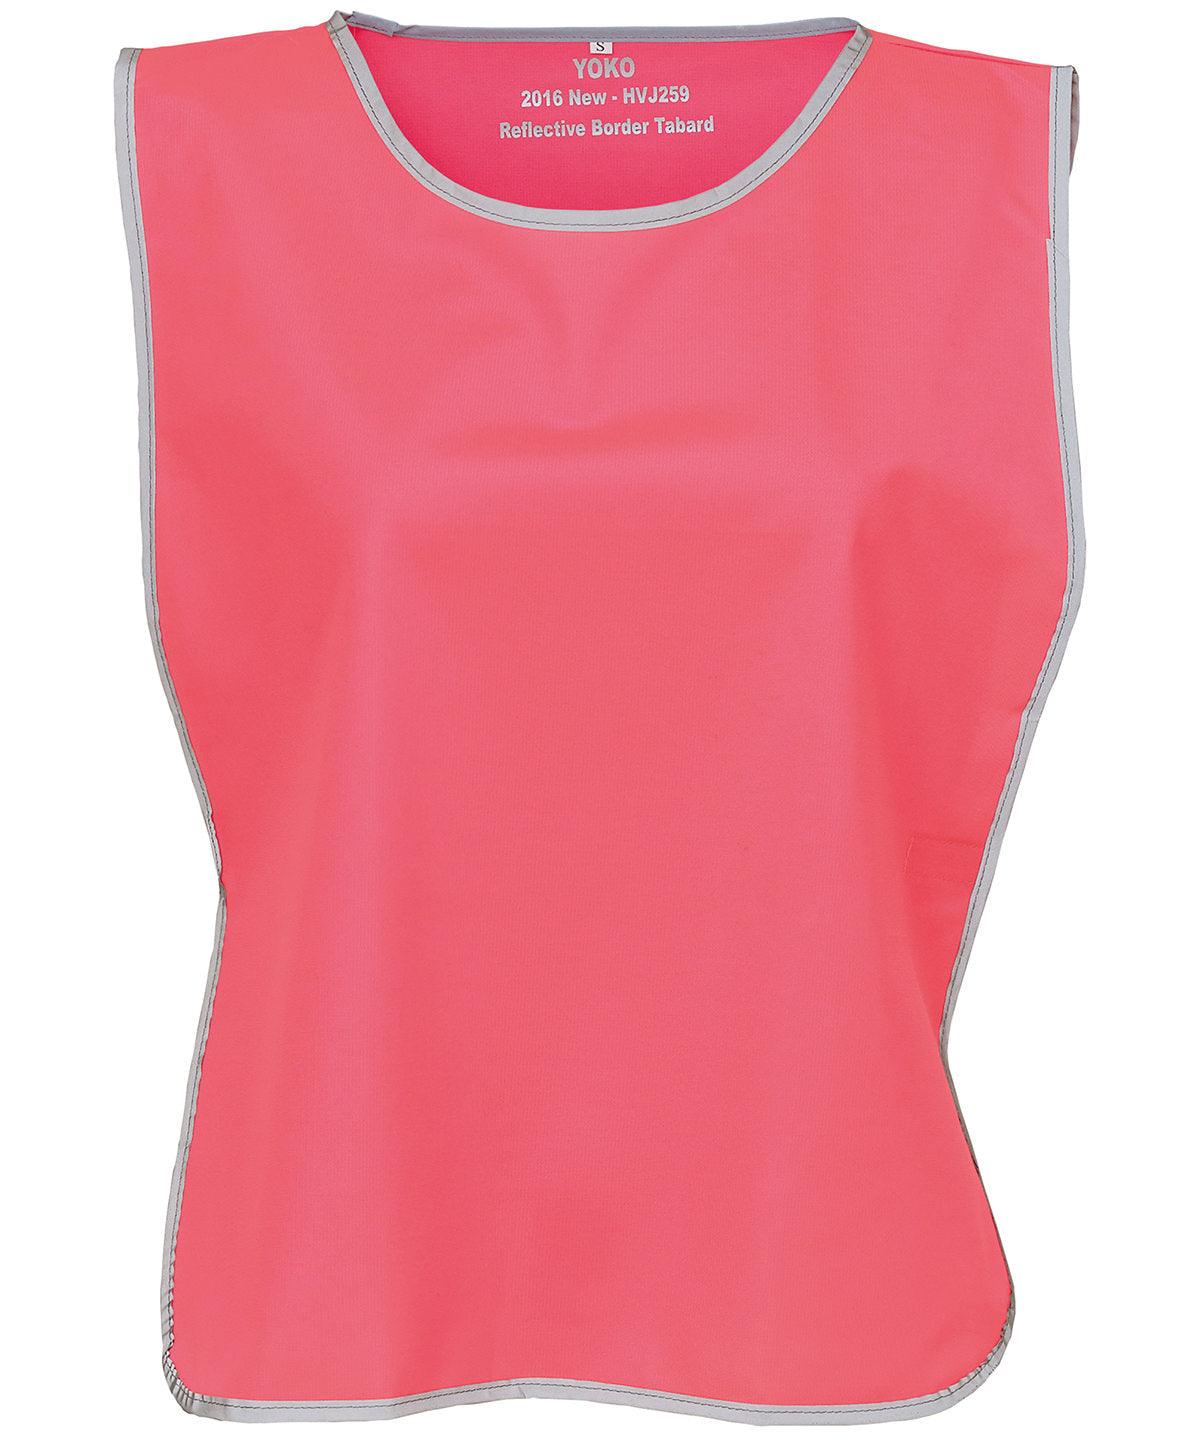 Fluo Pink - Hi-vis reflective border tabard (HVJ259) Tabards Yoko Must Haves, Safety Essentials, Safetywear, Workwear Schoolwear Centres